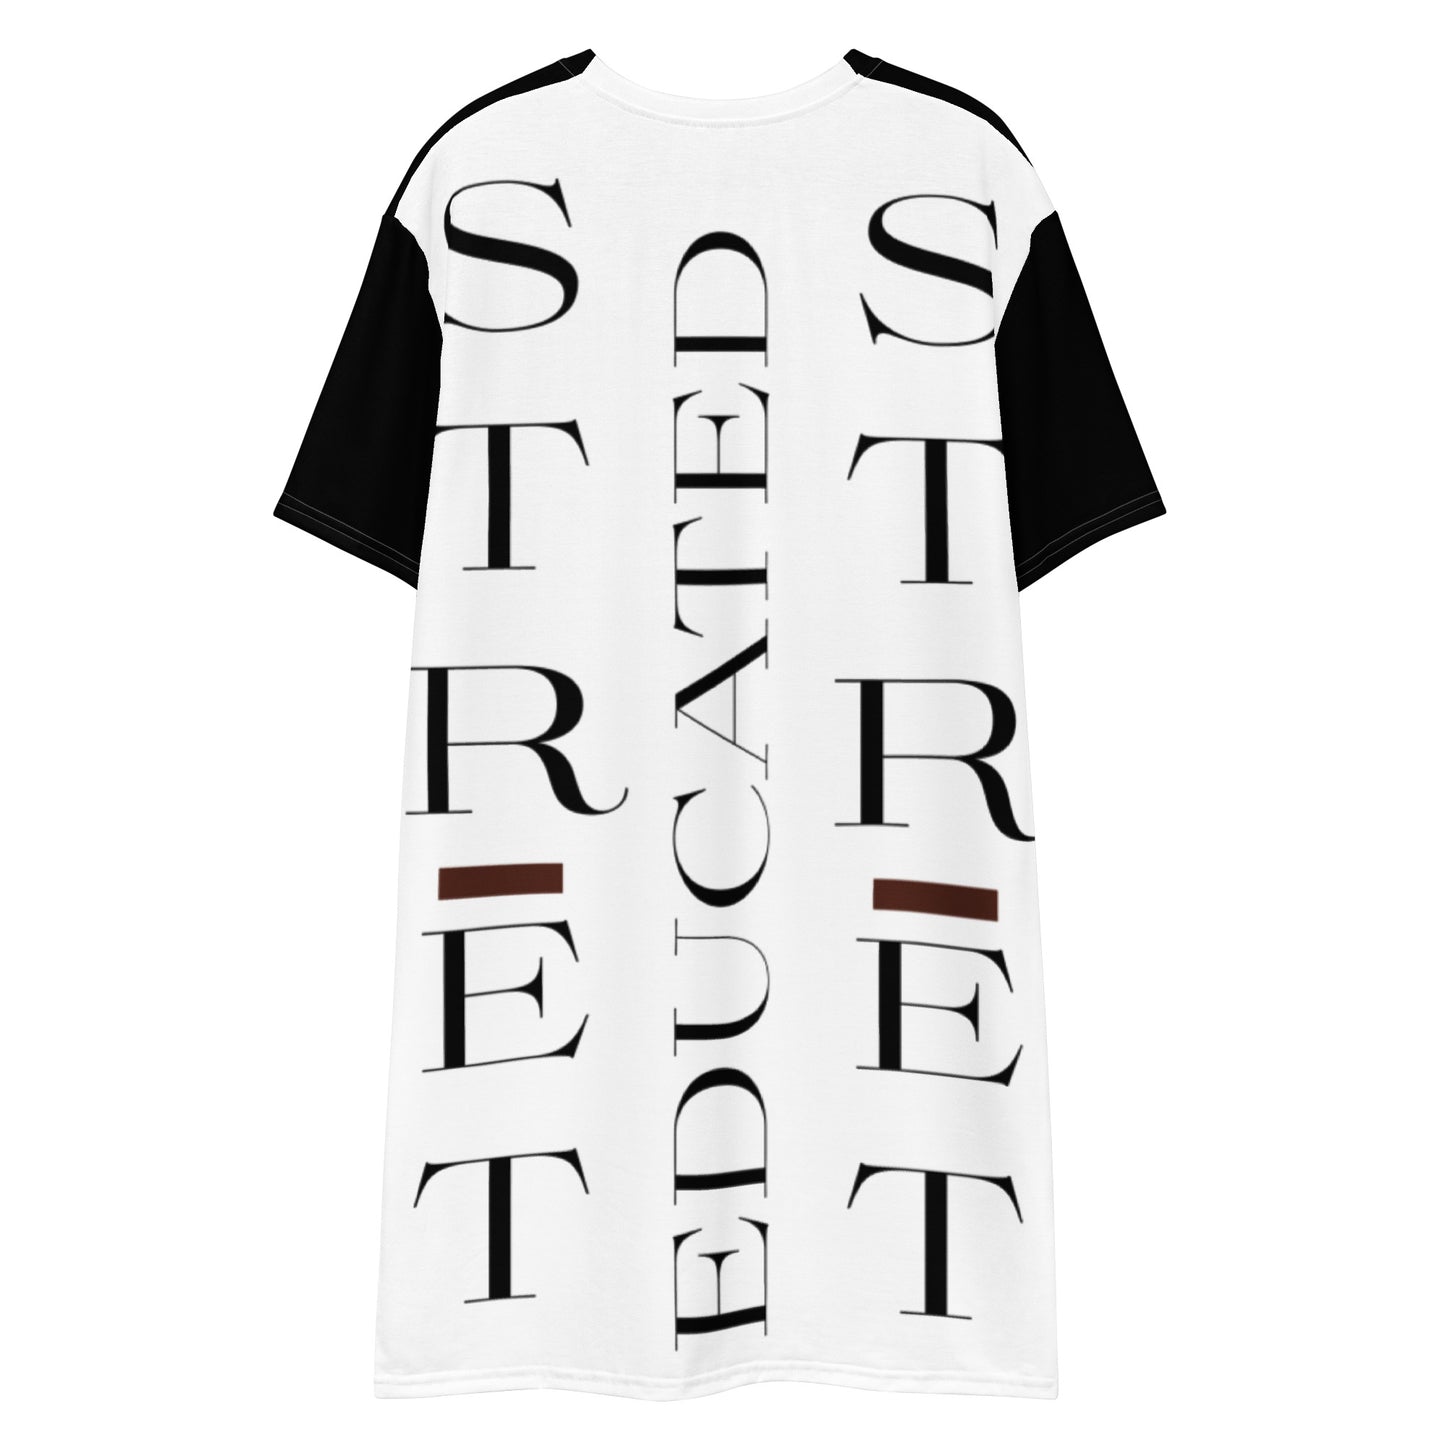 Stret Educated Luxurious Print T-shirt dress